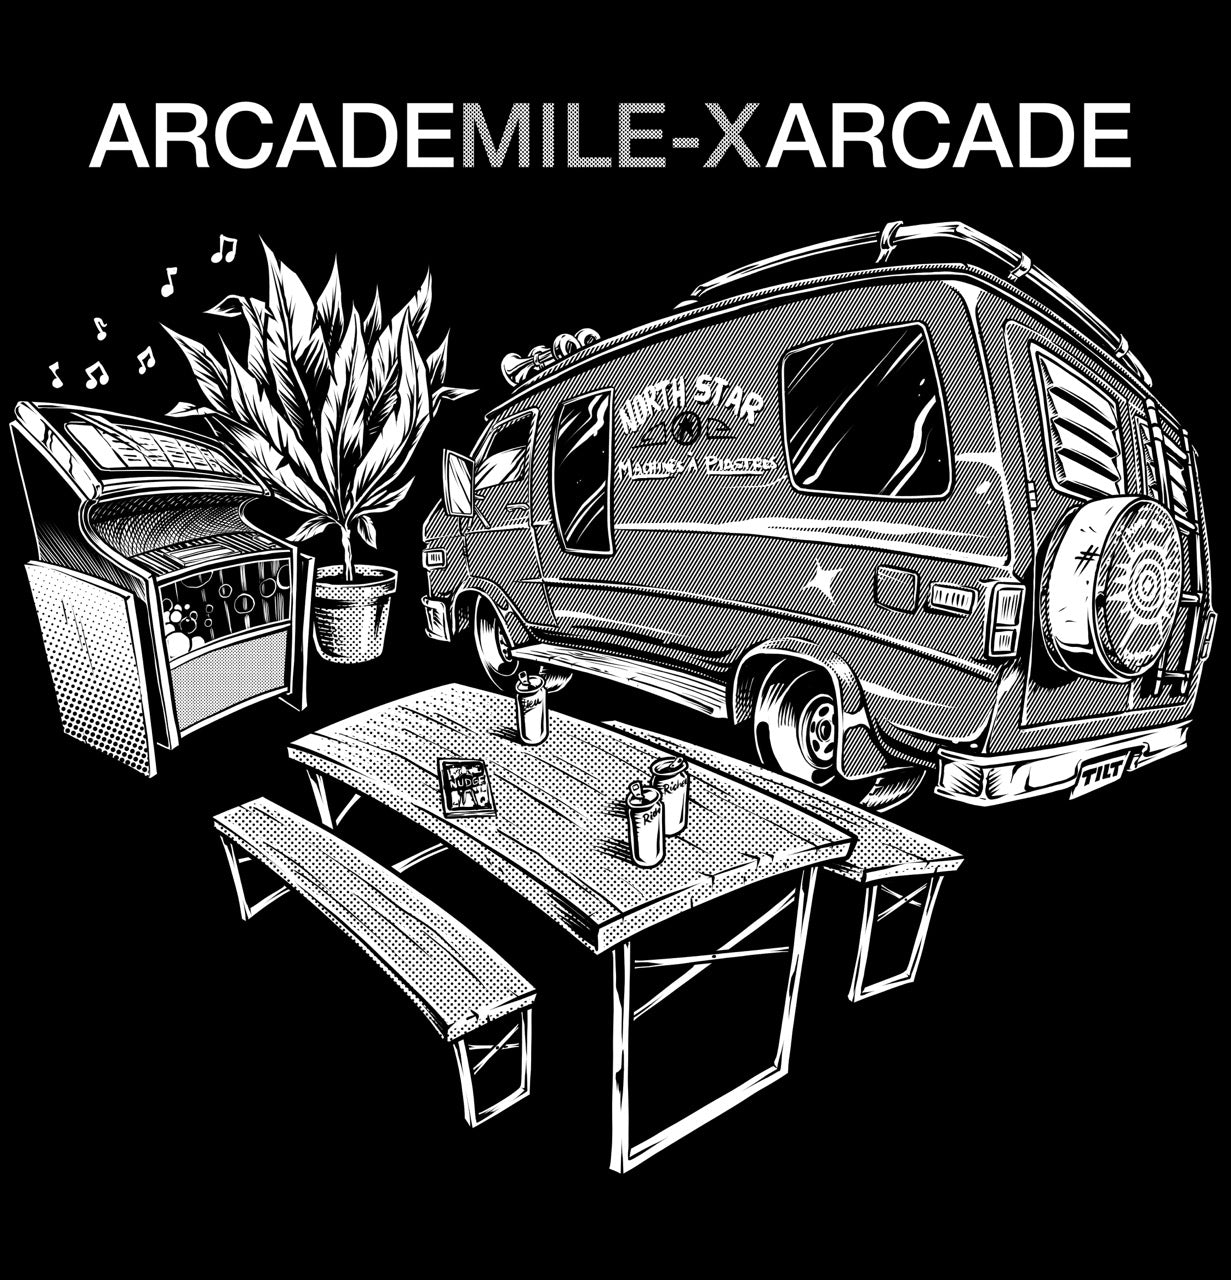 Arcade Mile-X Arcade Shirt